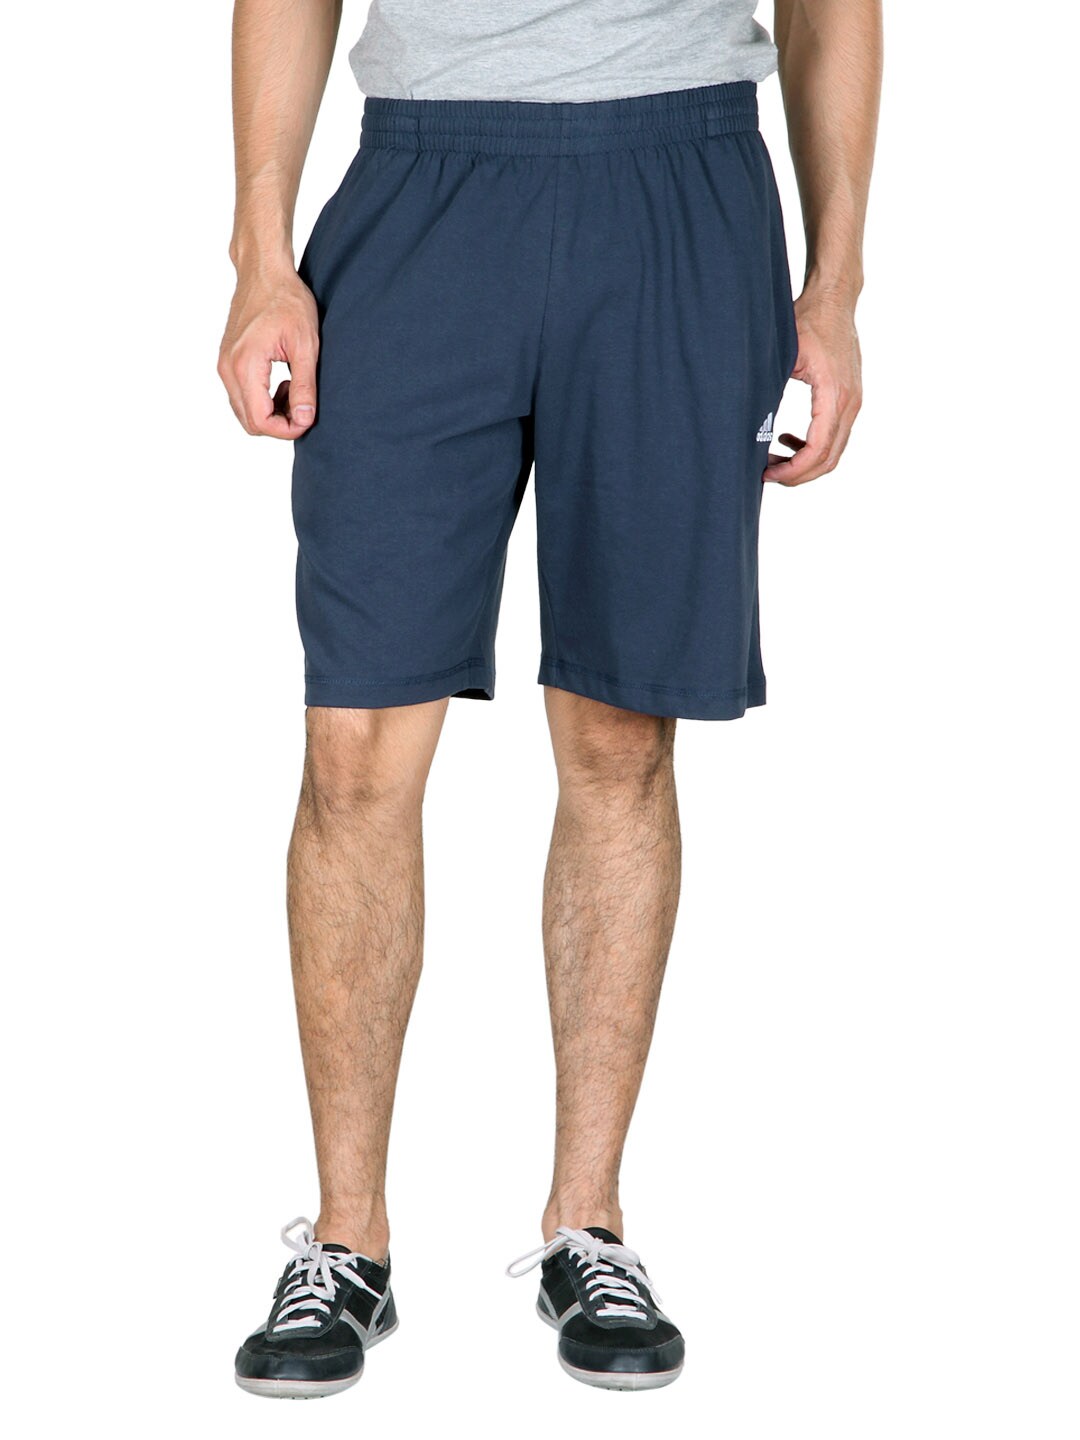 ADIDAS Men Navy Blue Shorts